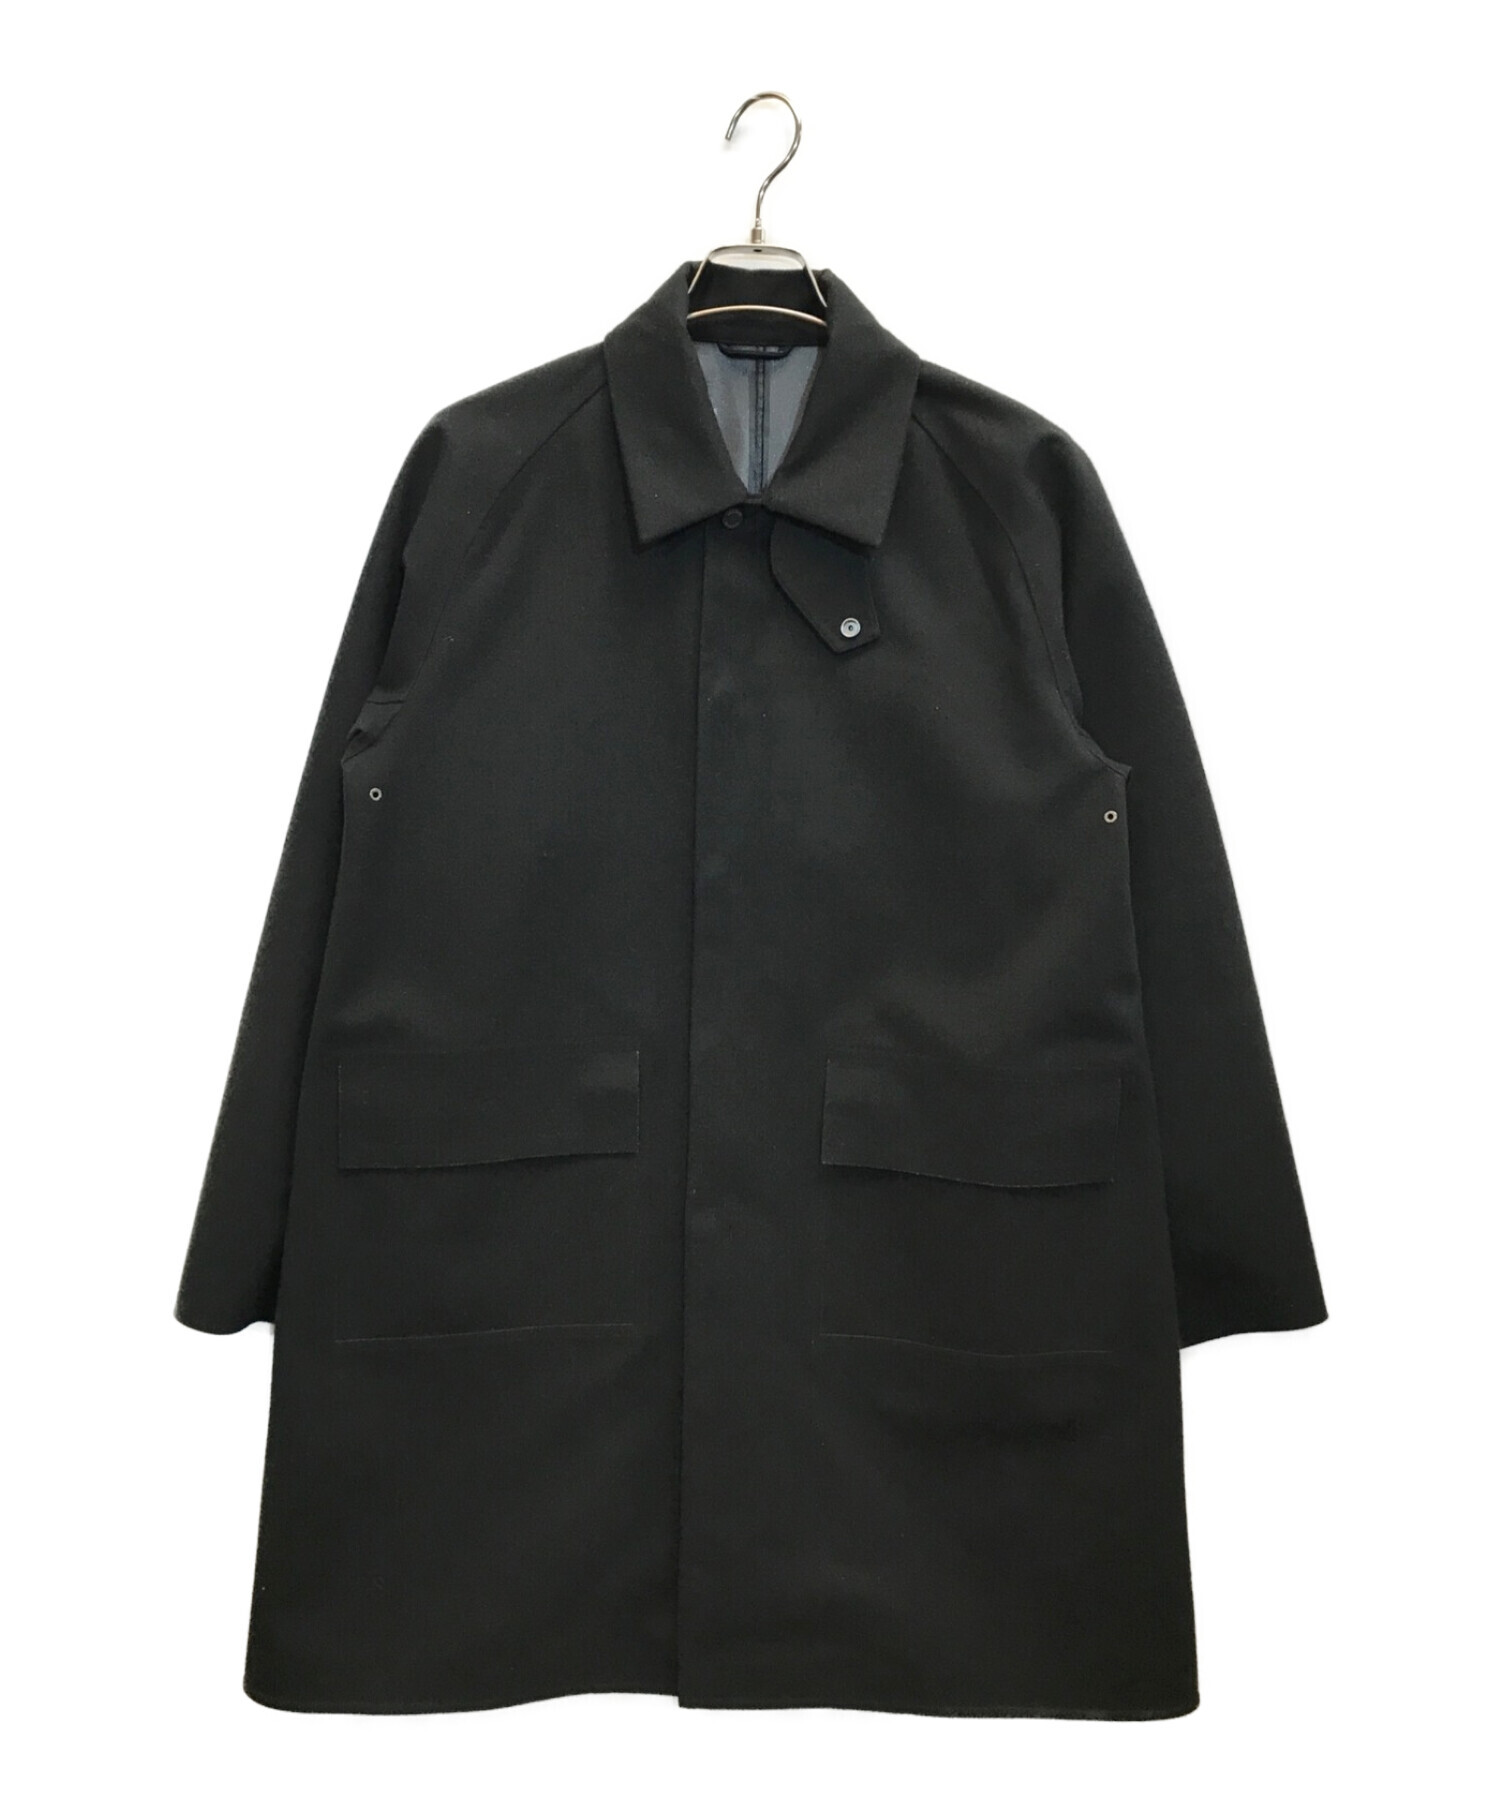 DESCENTE PAUSE (デサントポーズ) WOOL MIX SOUTIEN COLLAR COAT ウールミックスステンカラーコート ブラック  サイズ:M